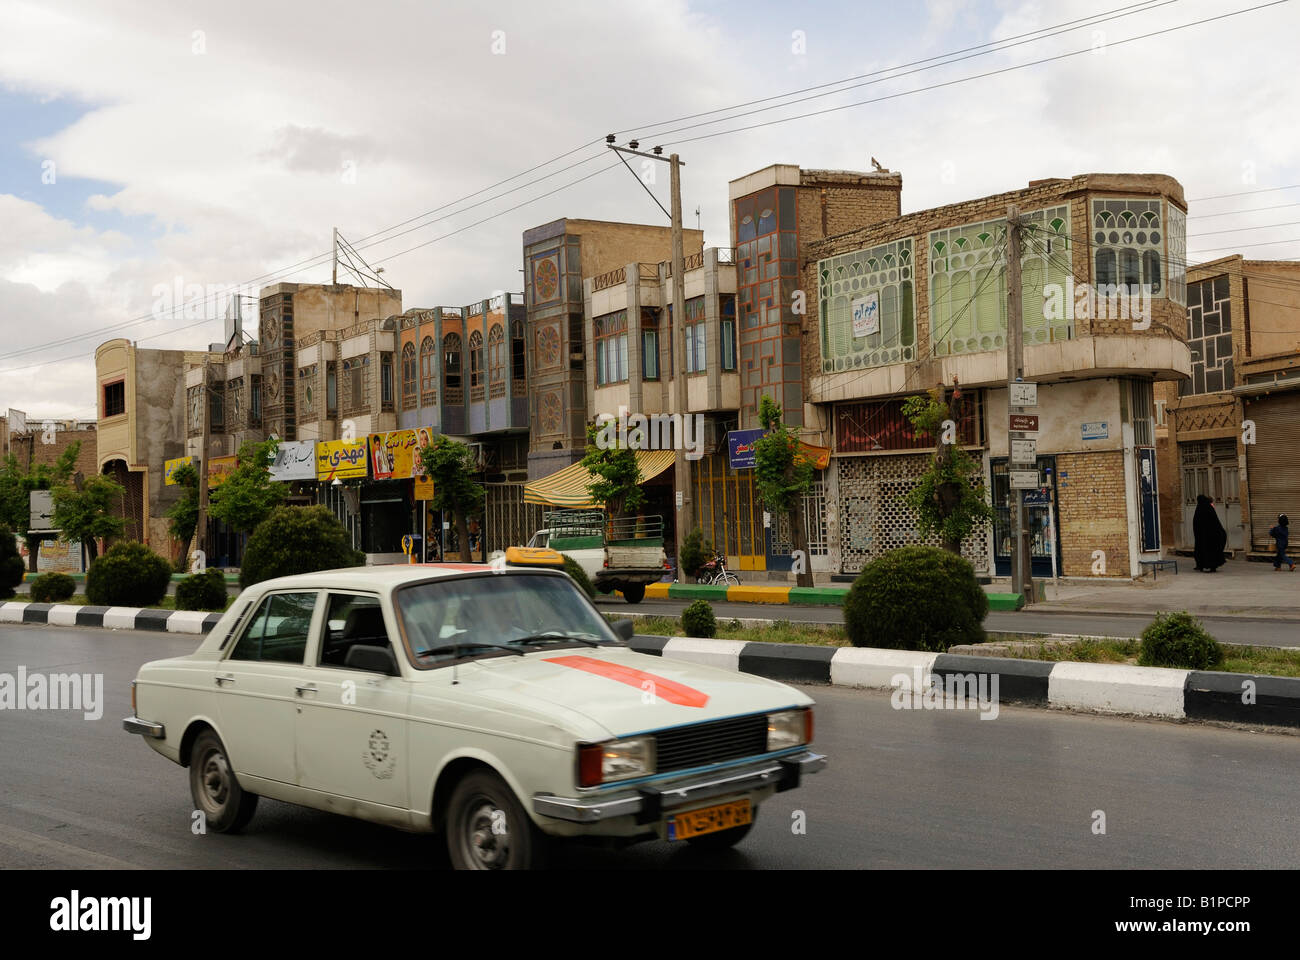 Iran 2006: Taxi in Emamzadah Jafar Street, Yazd, Iran Stock Photo